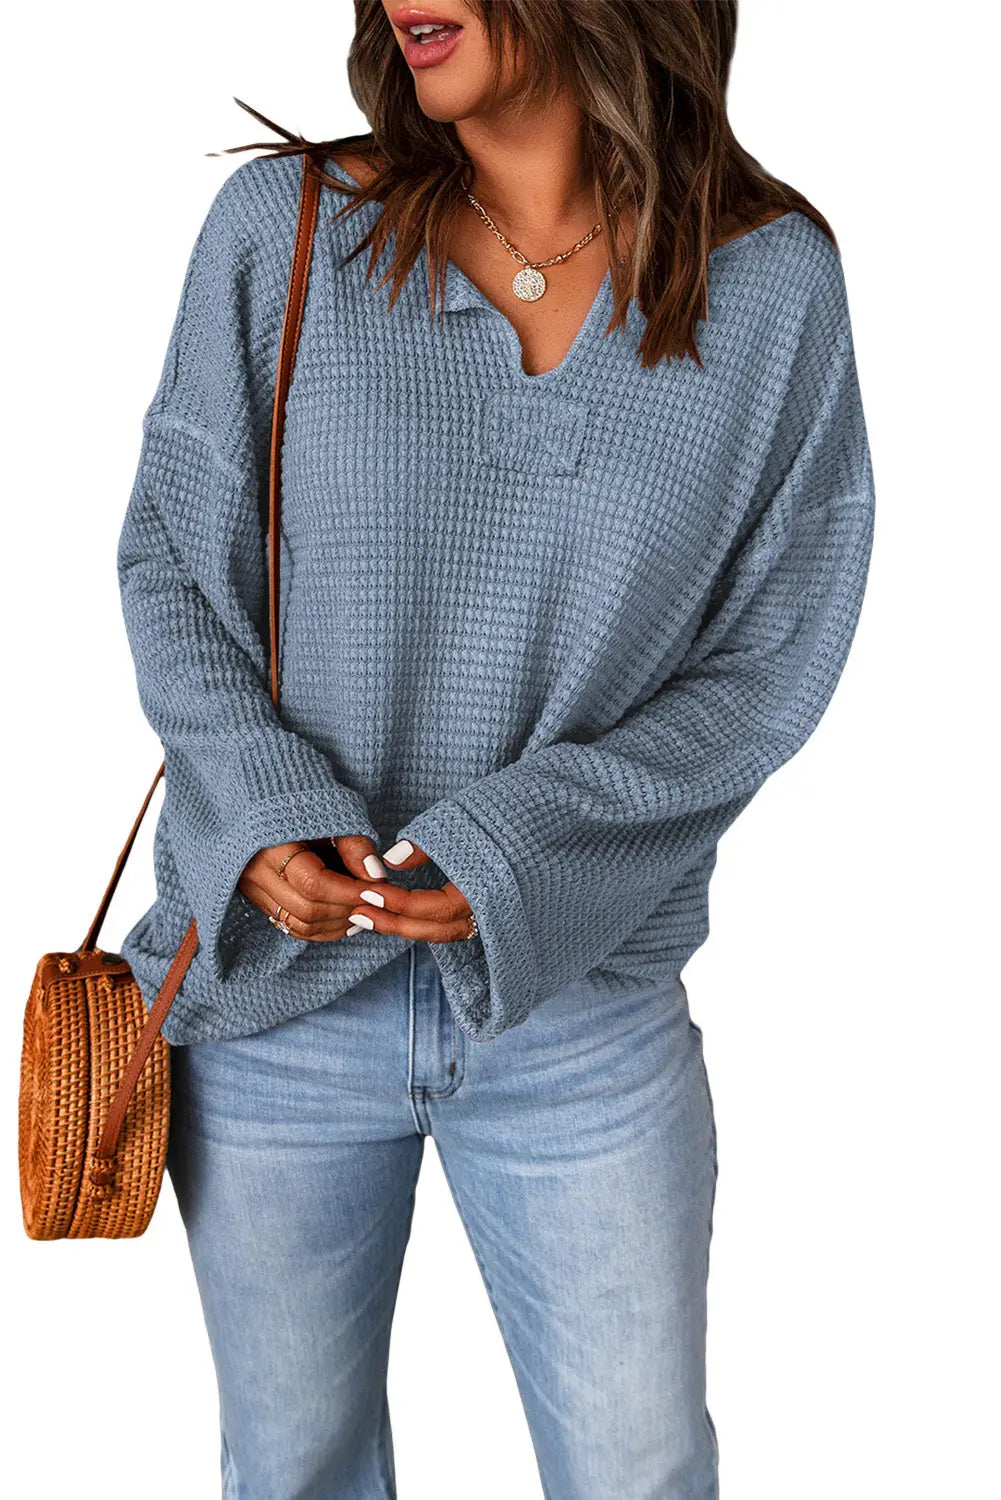 Dusk blue waffle knit loose long sleeve top - tops